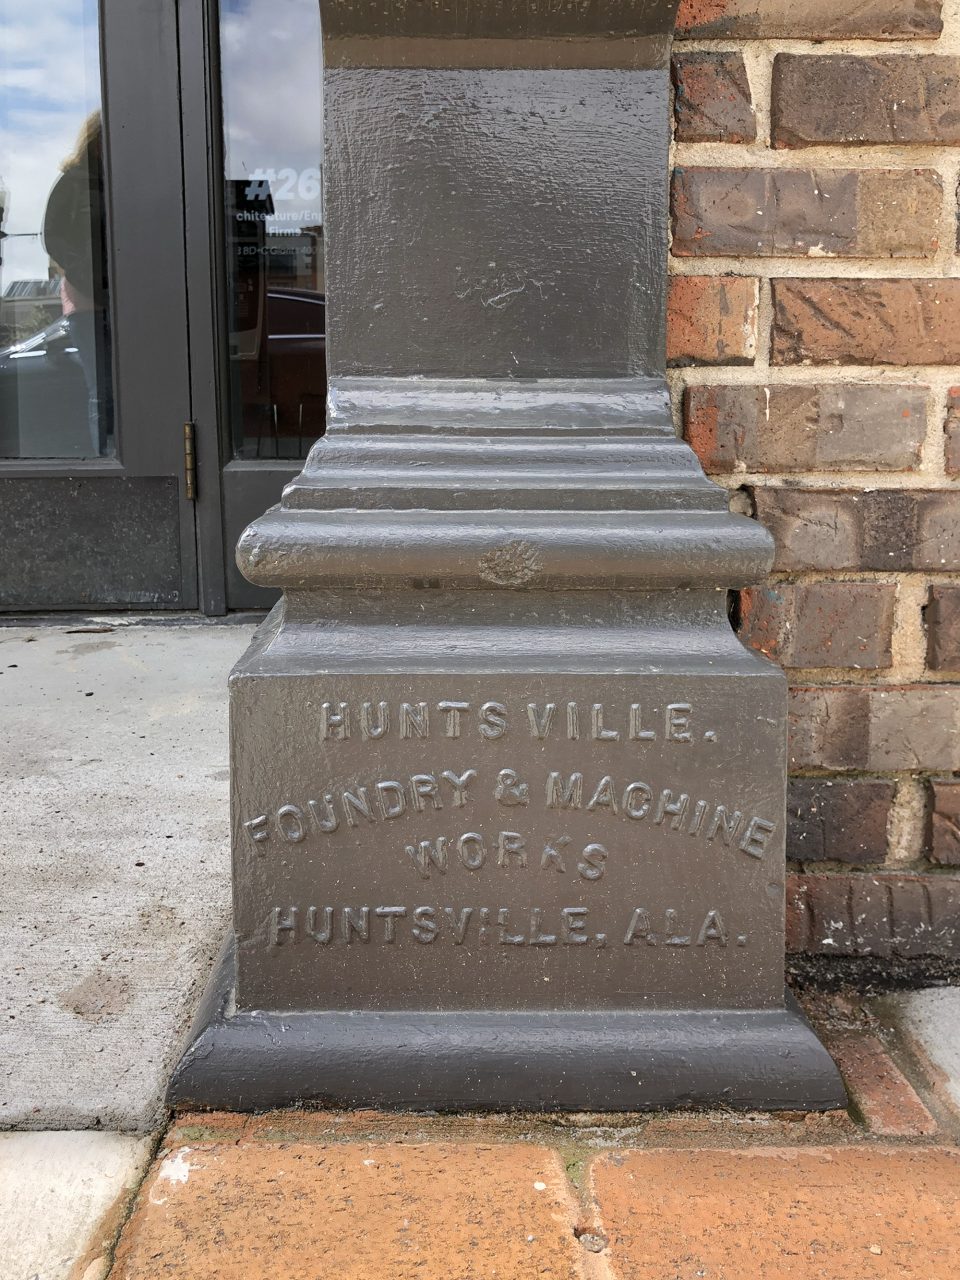 Iron work column manufactured by Huntsville Foundry and Machine Works of Huntsville, Alabama.